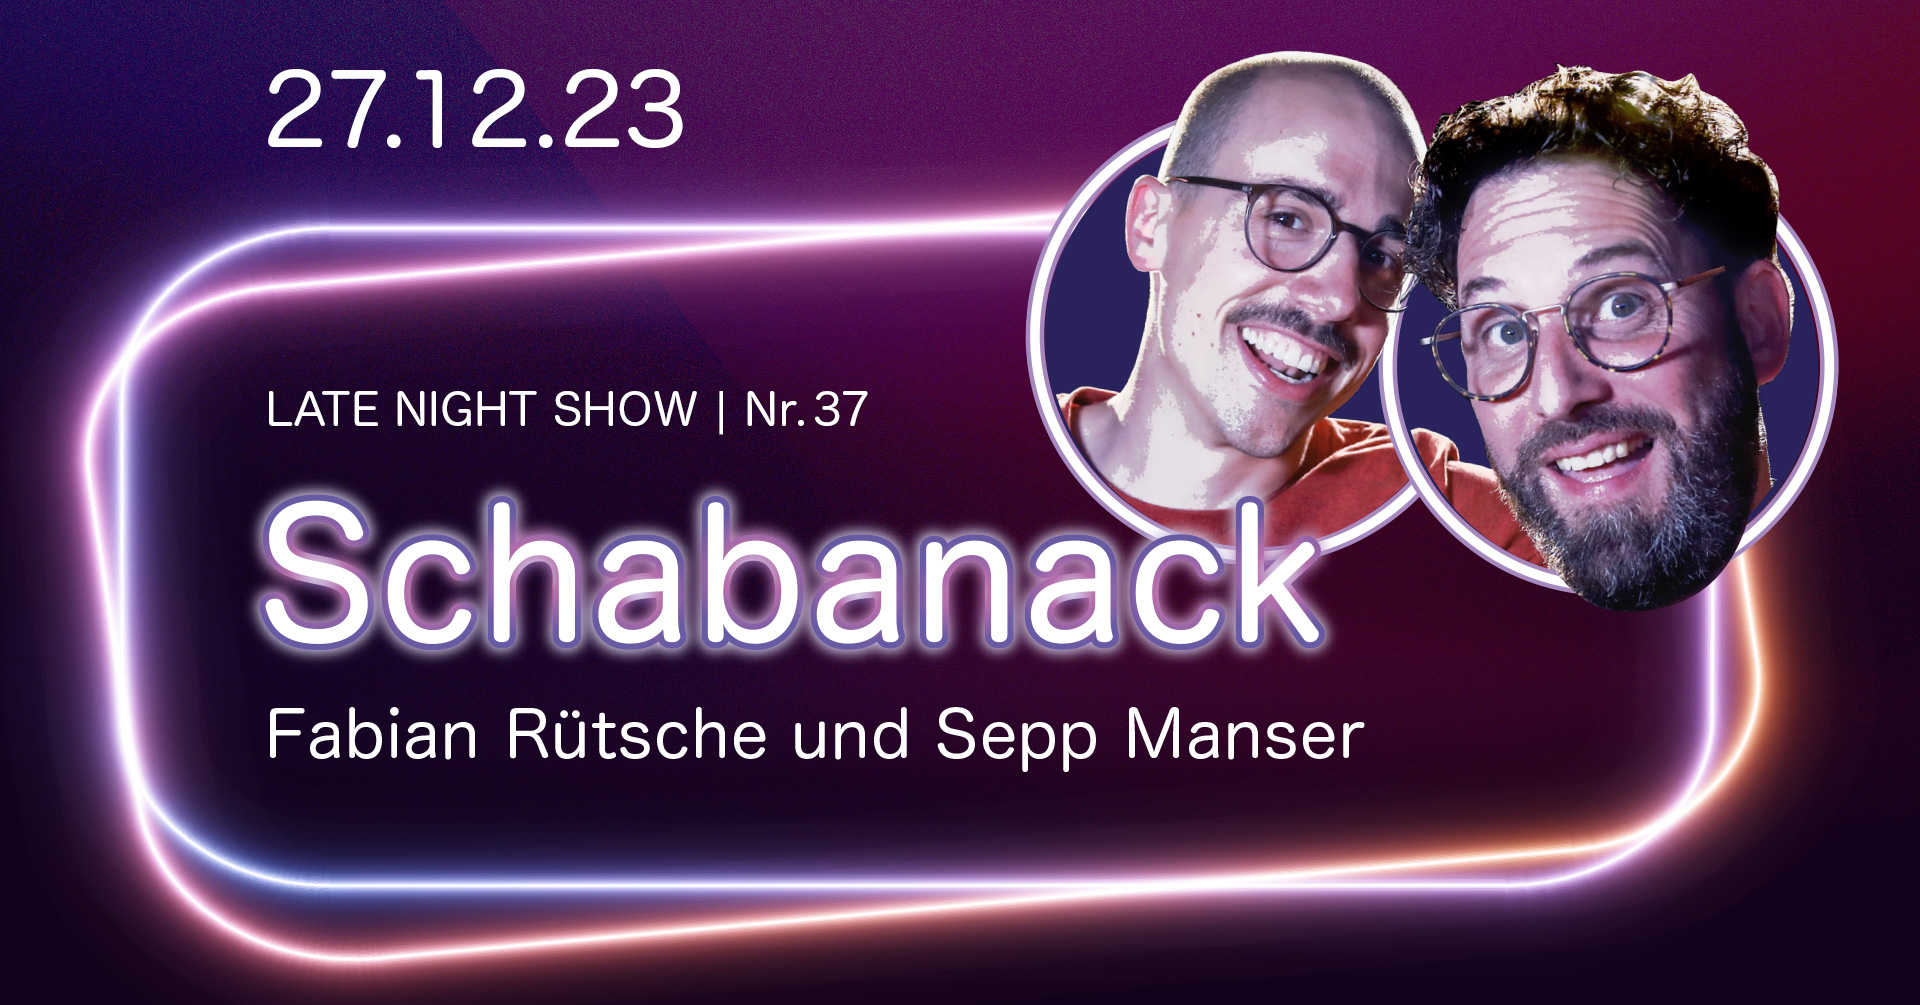 SCHABANACK Nr. 37 | Late-Night-Show